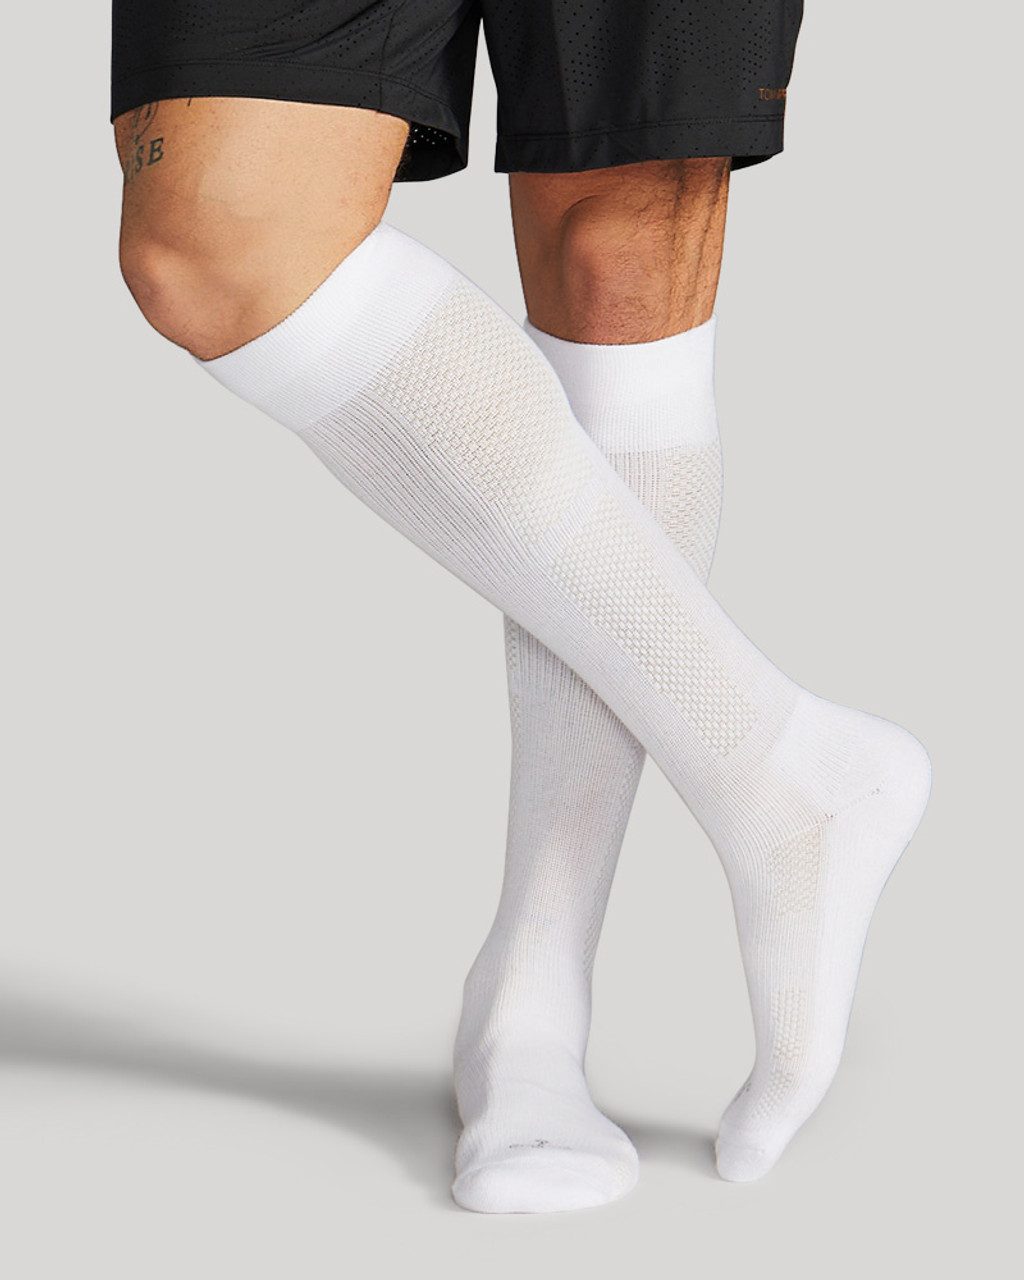 ActiveWick Compression Socks | Men's Over the Calf